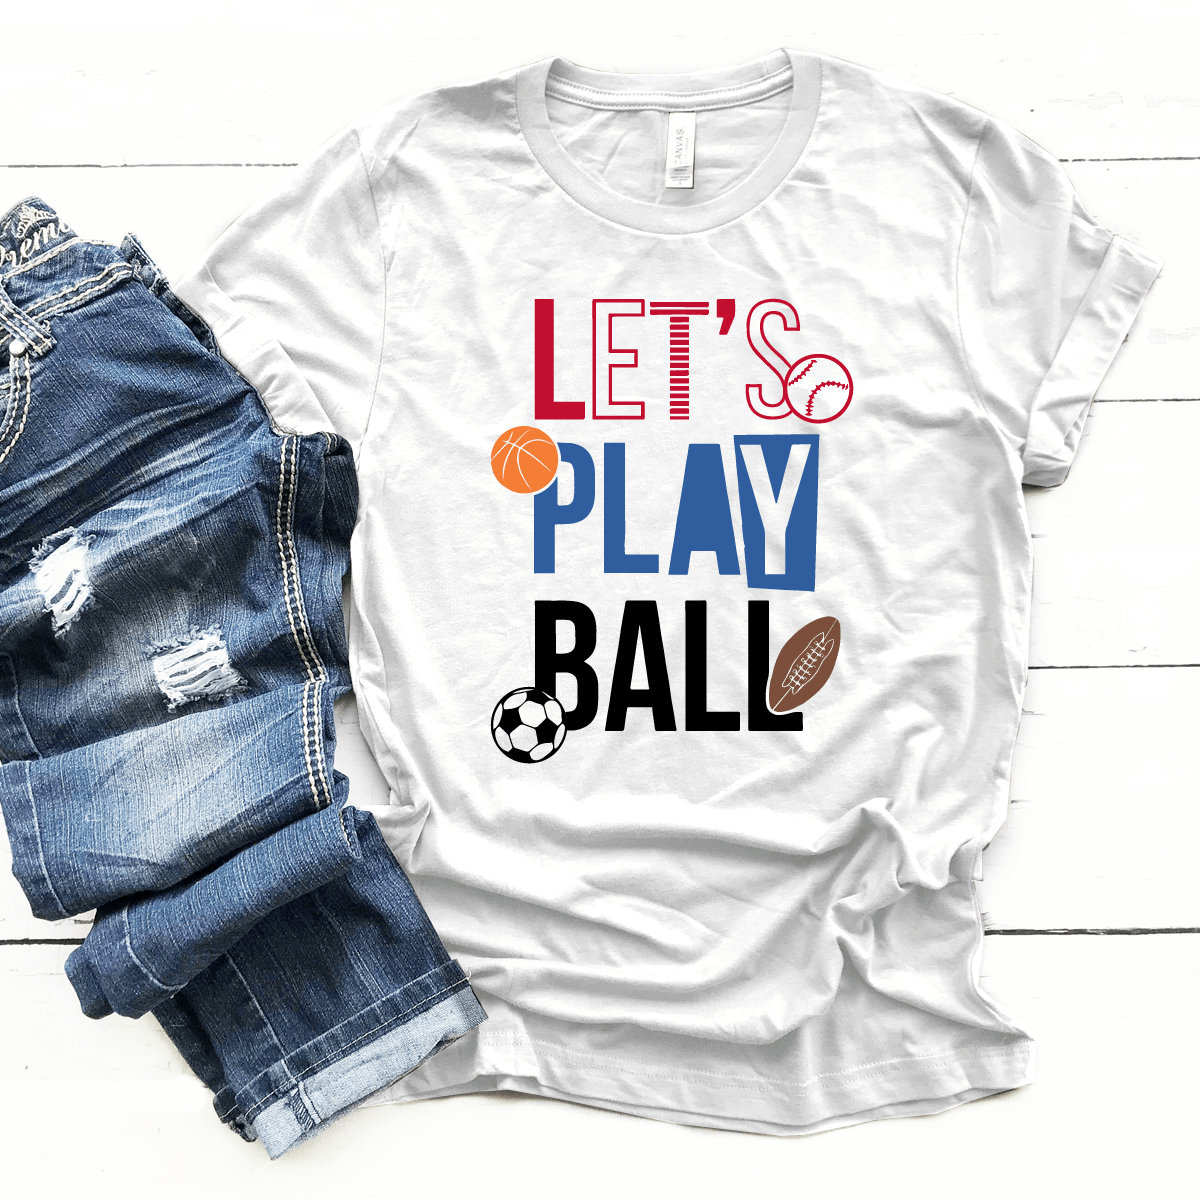 play ball shirt